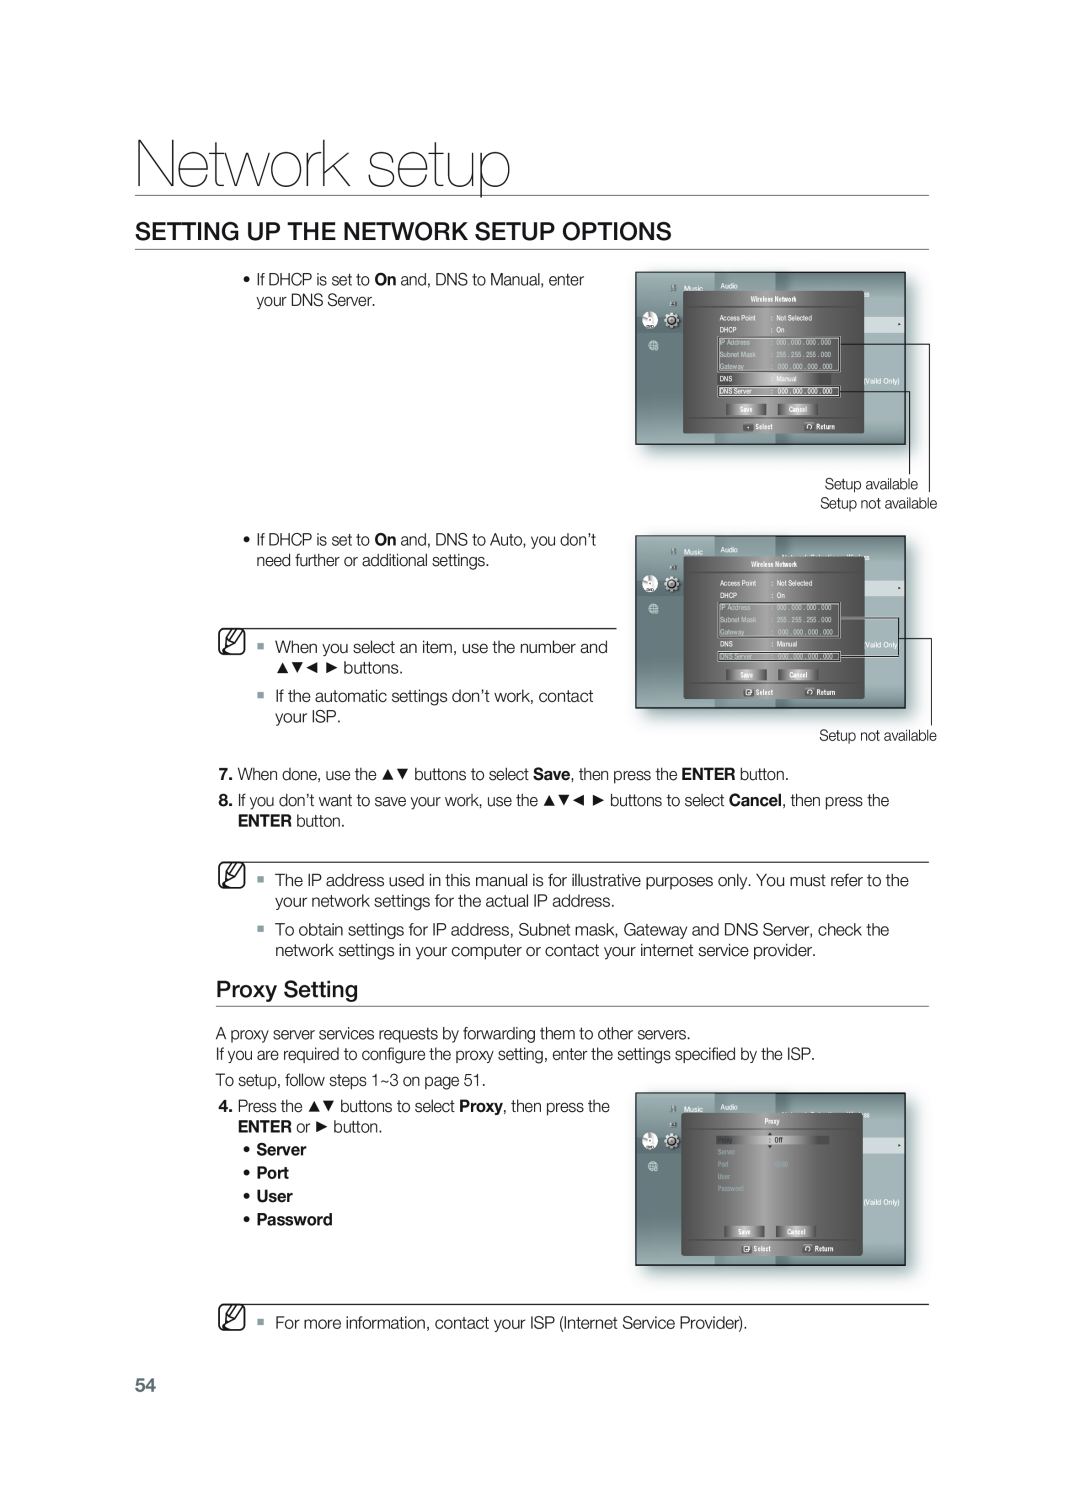 Samsung HT-BD1255 Proxy Setting, Network setup, Setting Up The Network Setup Options, •Server •Port •User •Password 